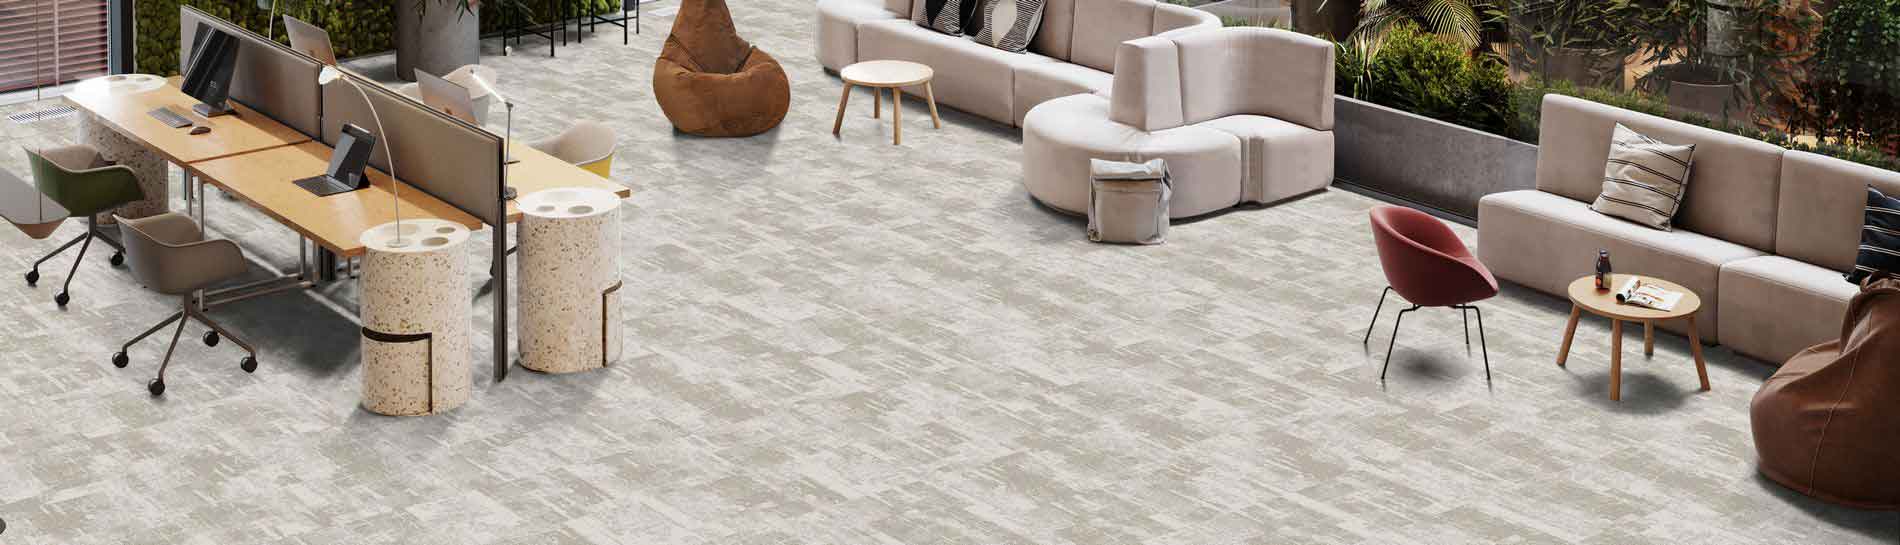 Burmatex carpet Tile with carbon negative yarn